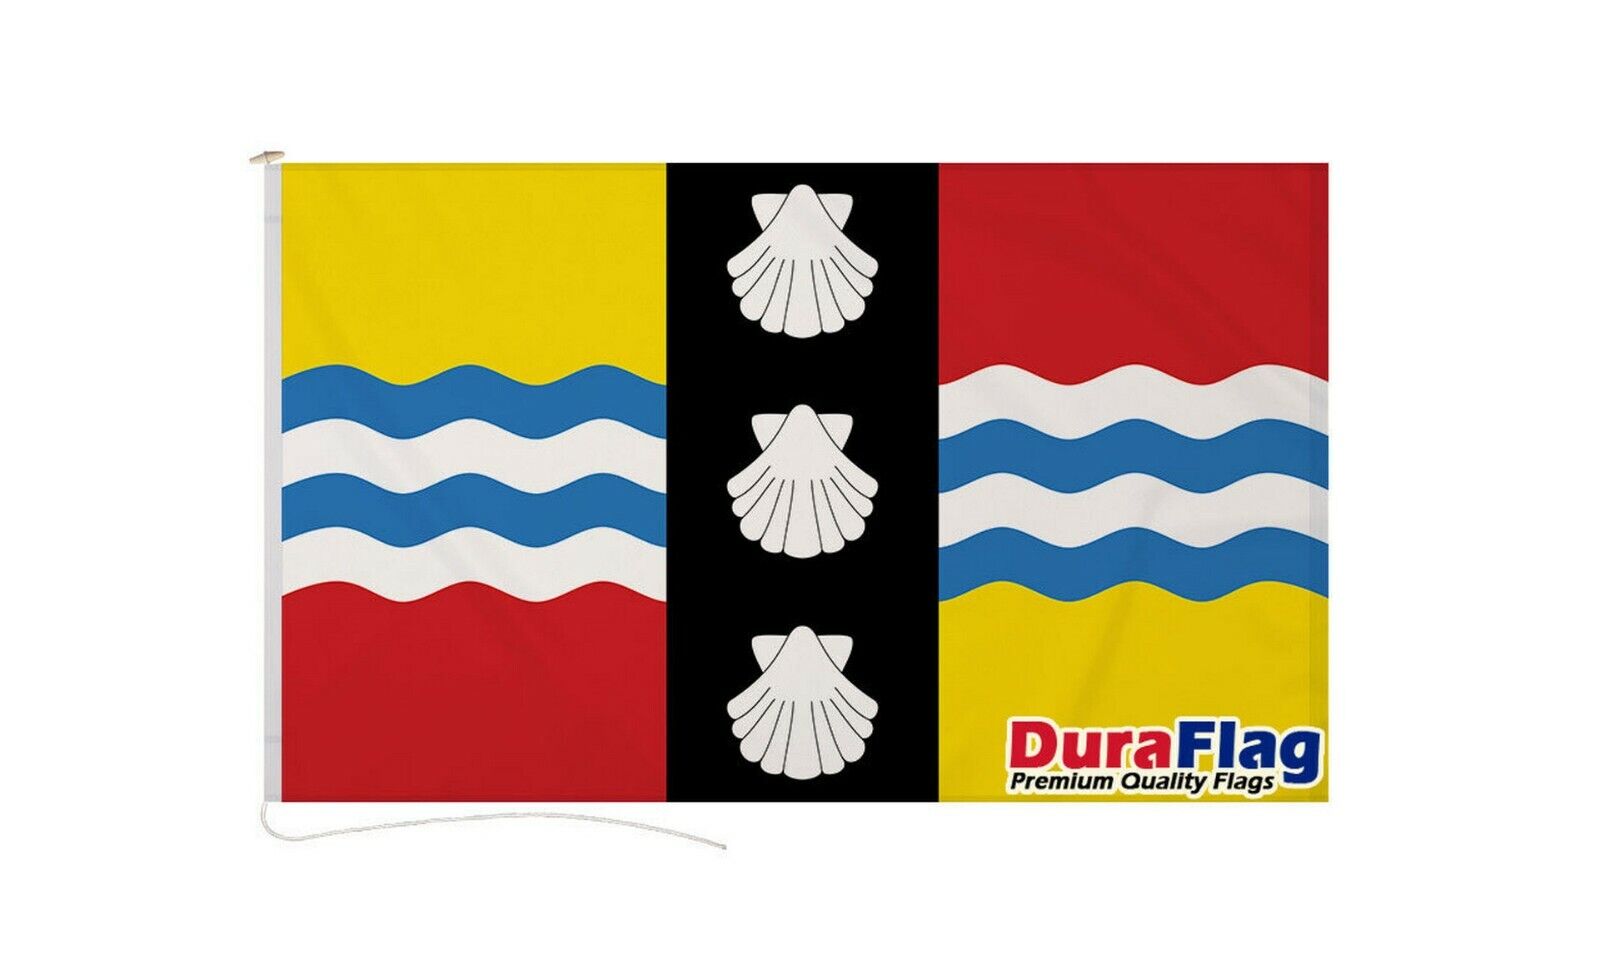 BEDFORDSHIRE NEW DURAFLAG 150cm x 90cm 5x3 FEET HIGH QUALITY FLAG ROPE & TOGGLE